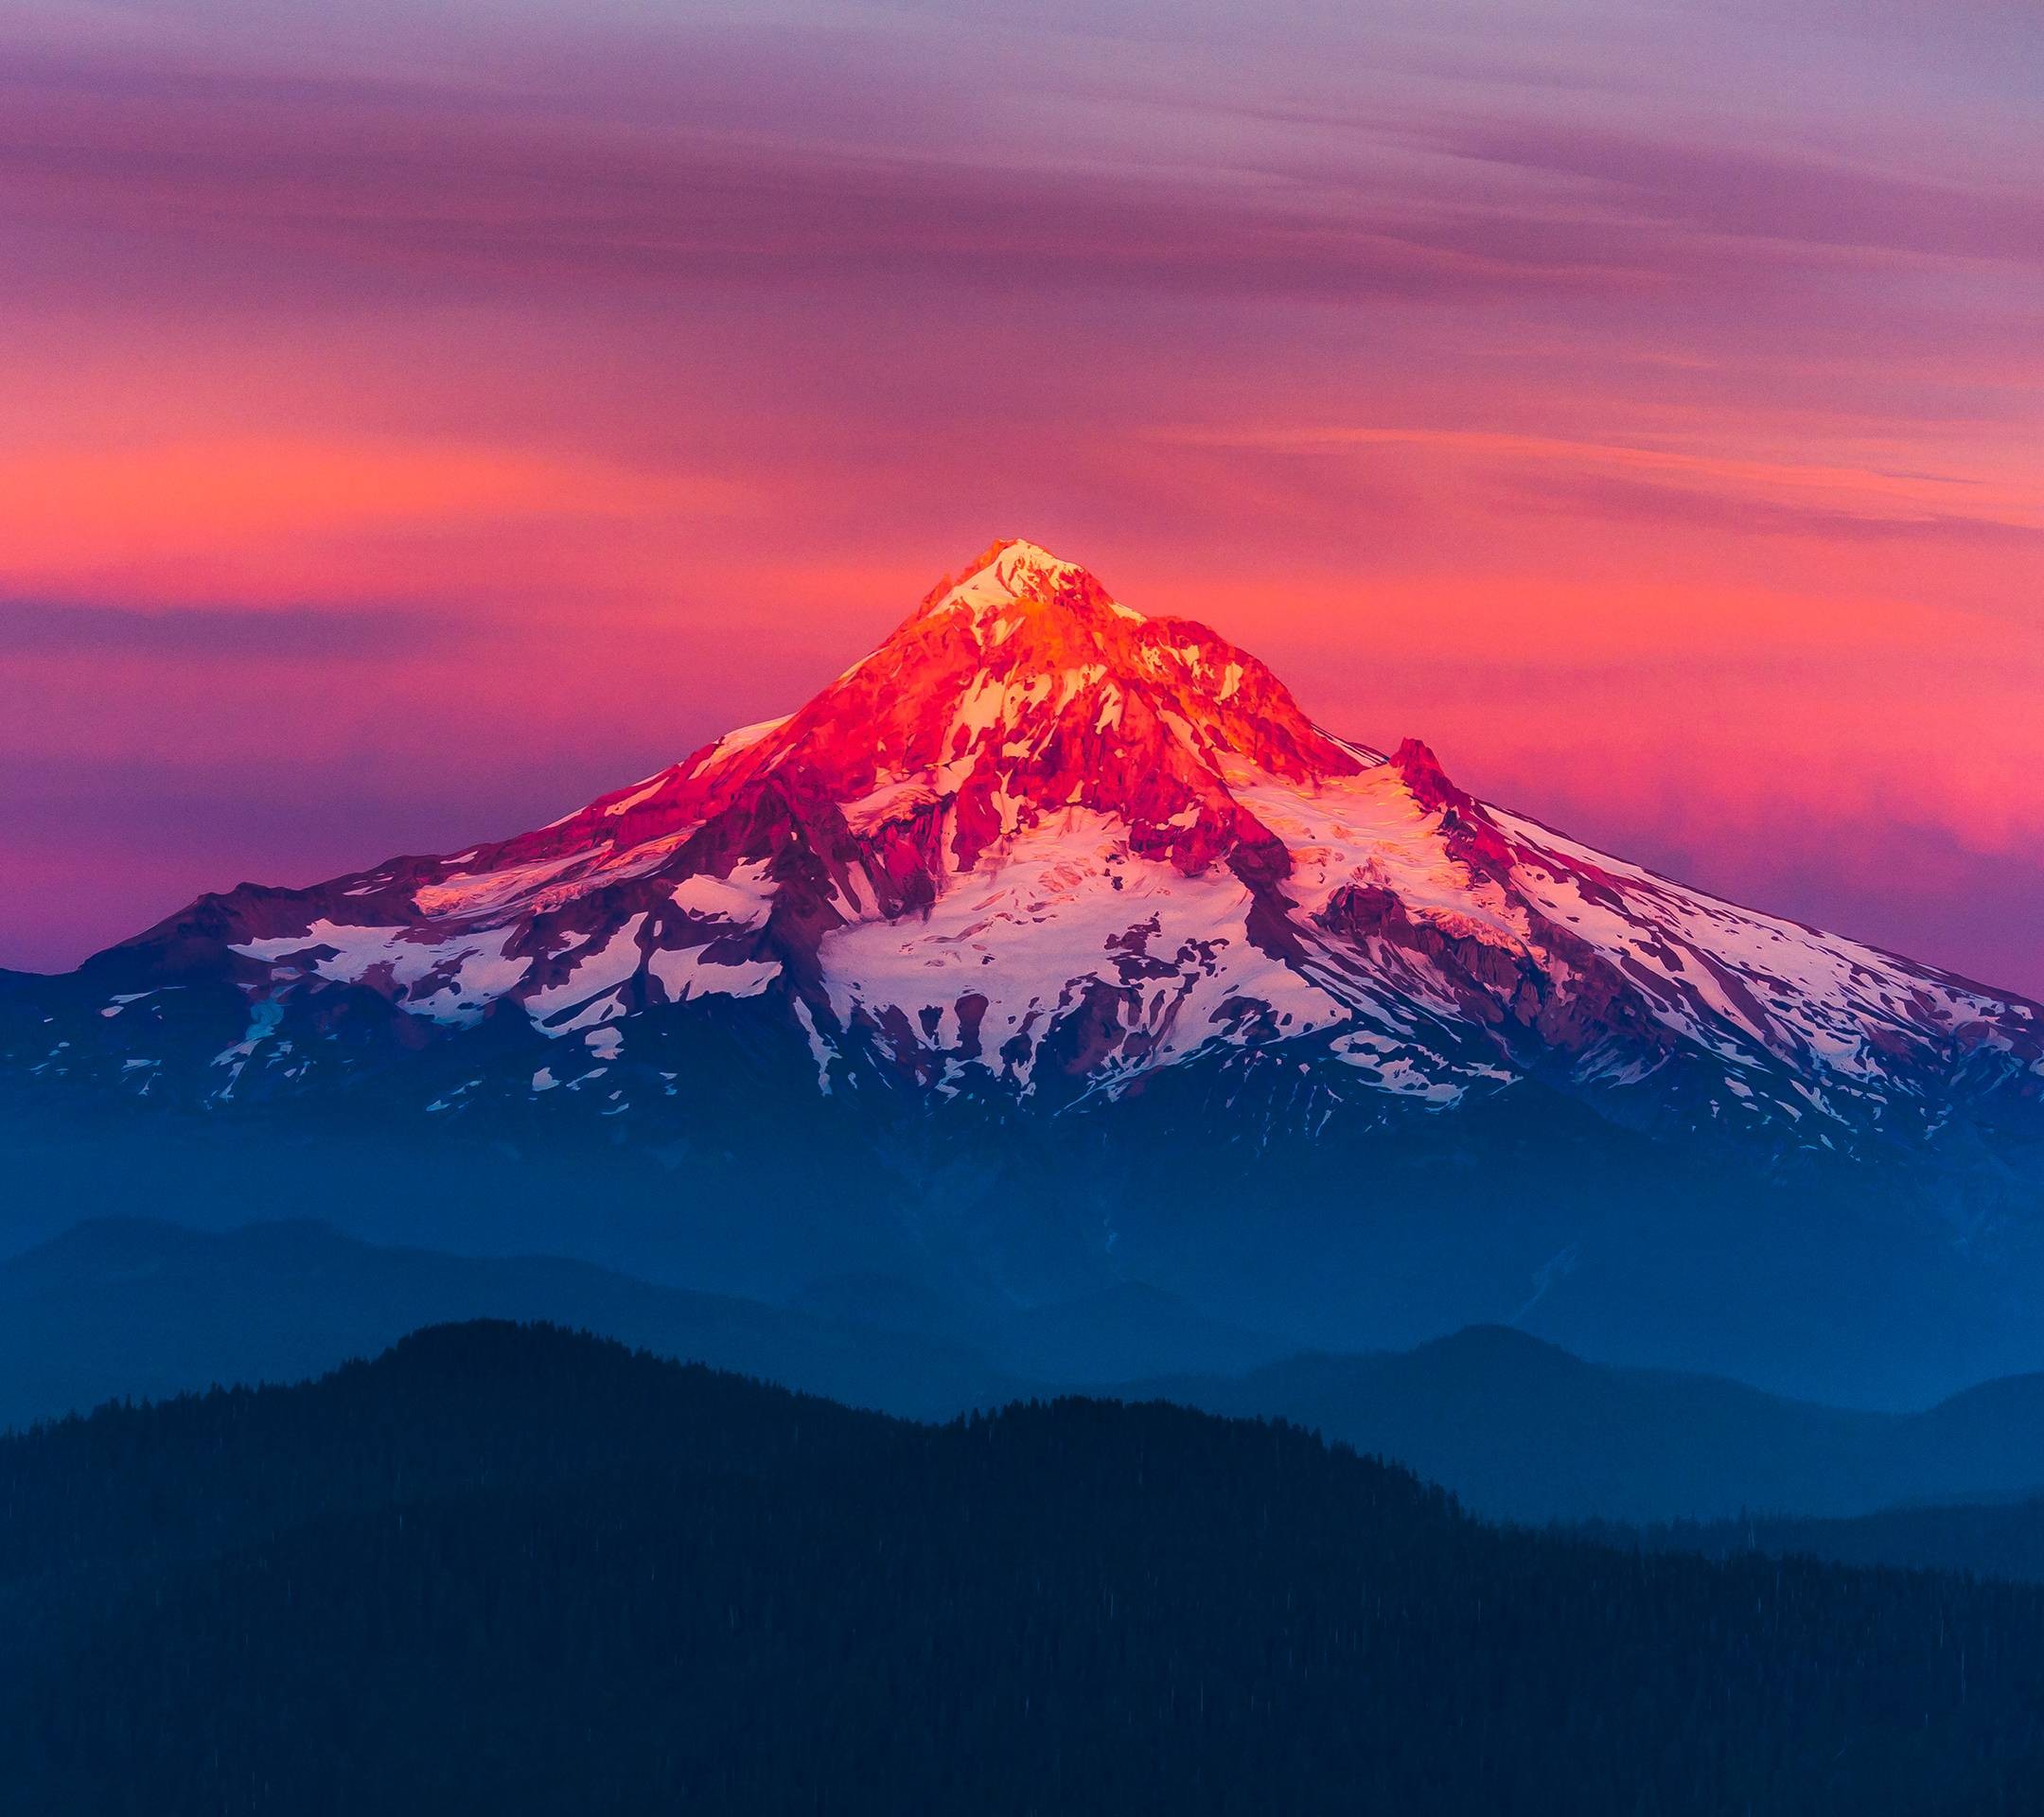 General 2160x1920 larch mountain Oregon landscape sunset purple sky Mount Hood mountains USA nature